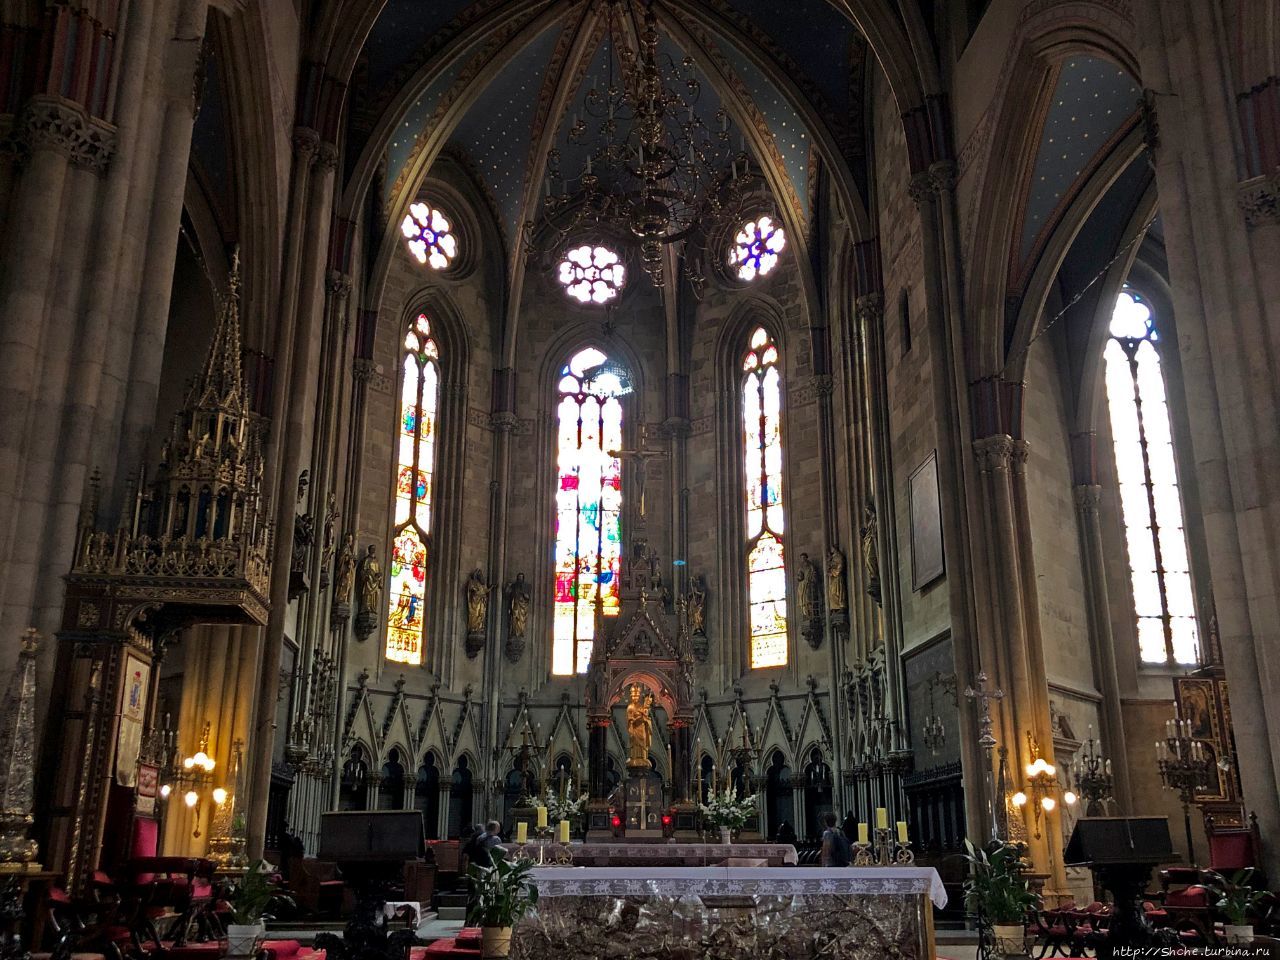 Zagrebačka katedrala - главный католический храм Хорватии